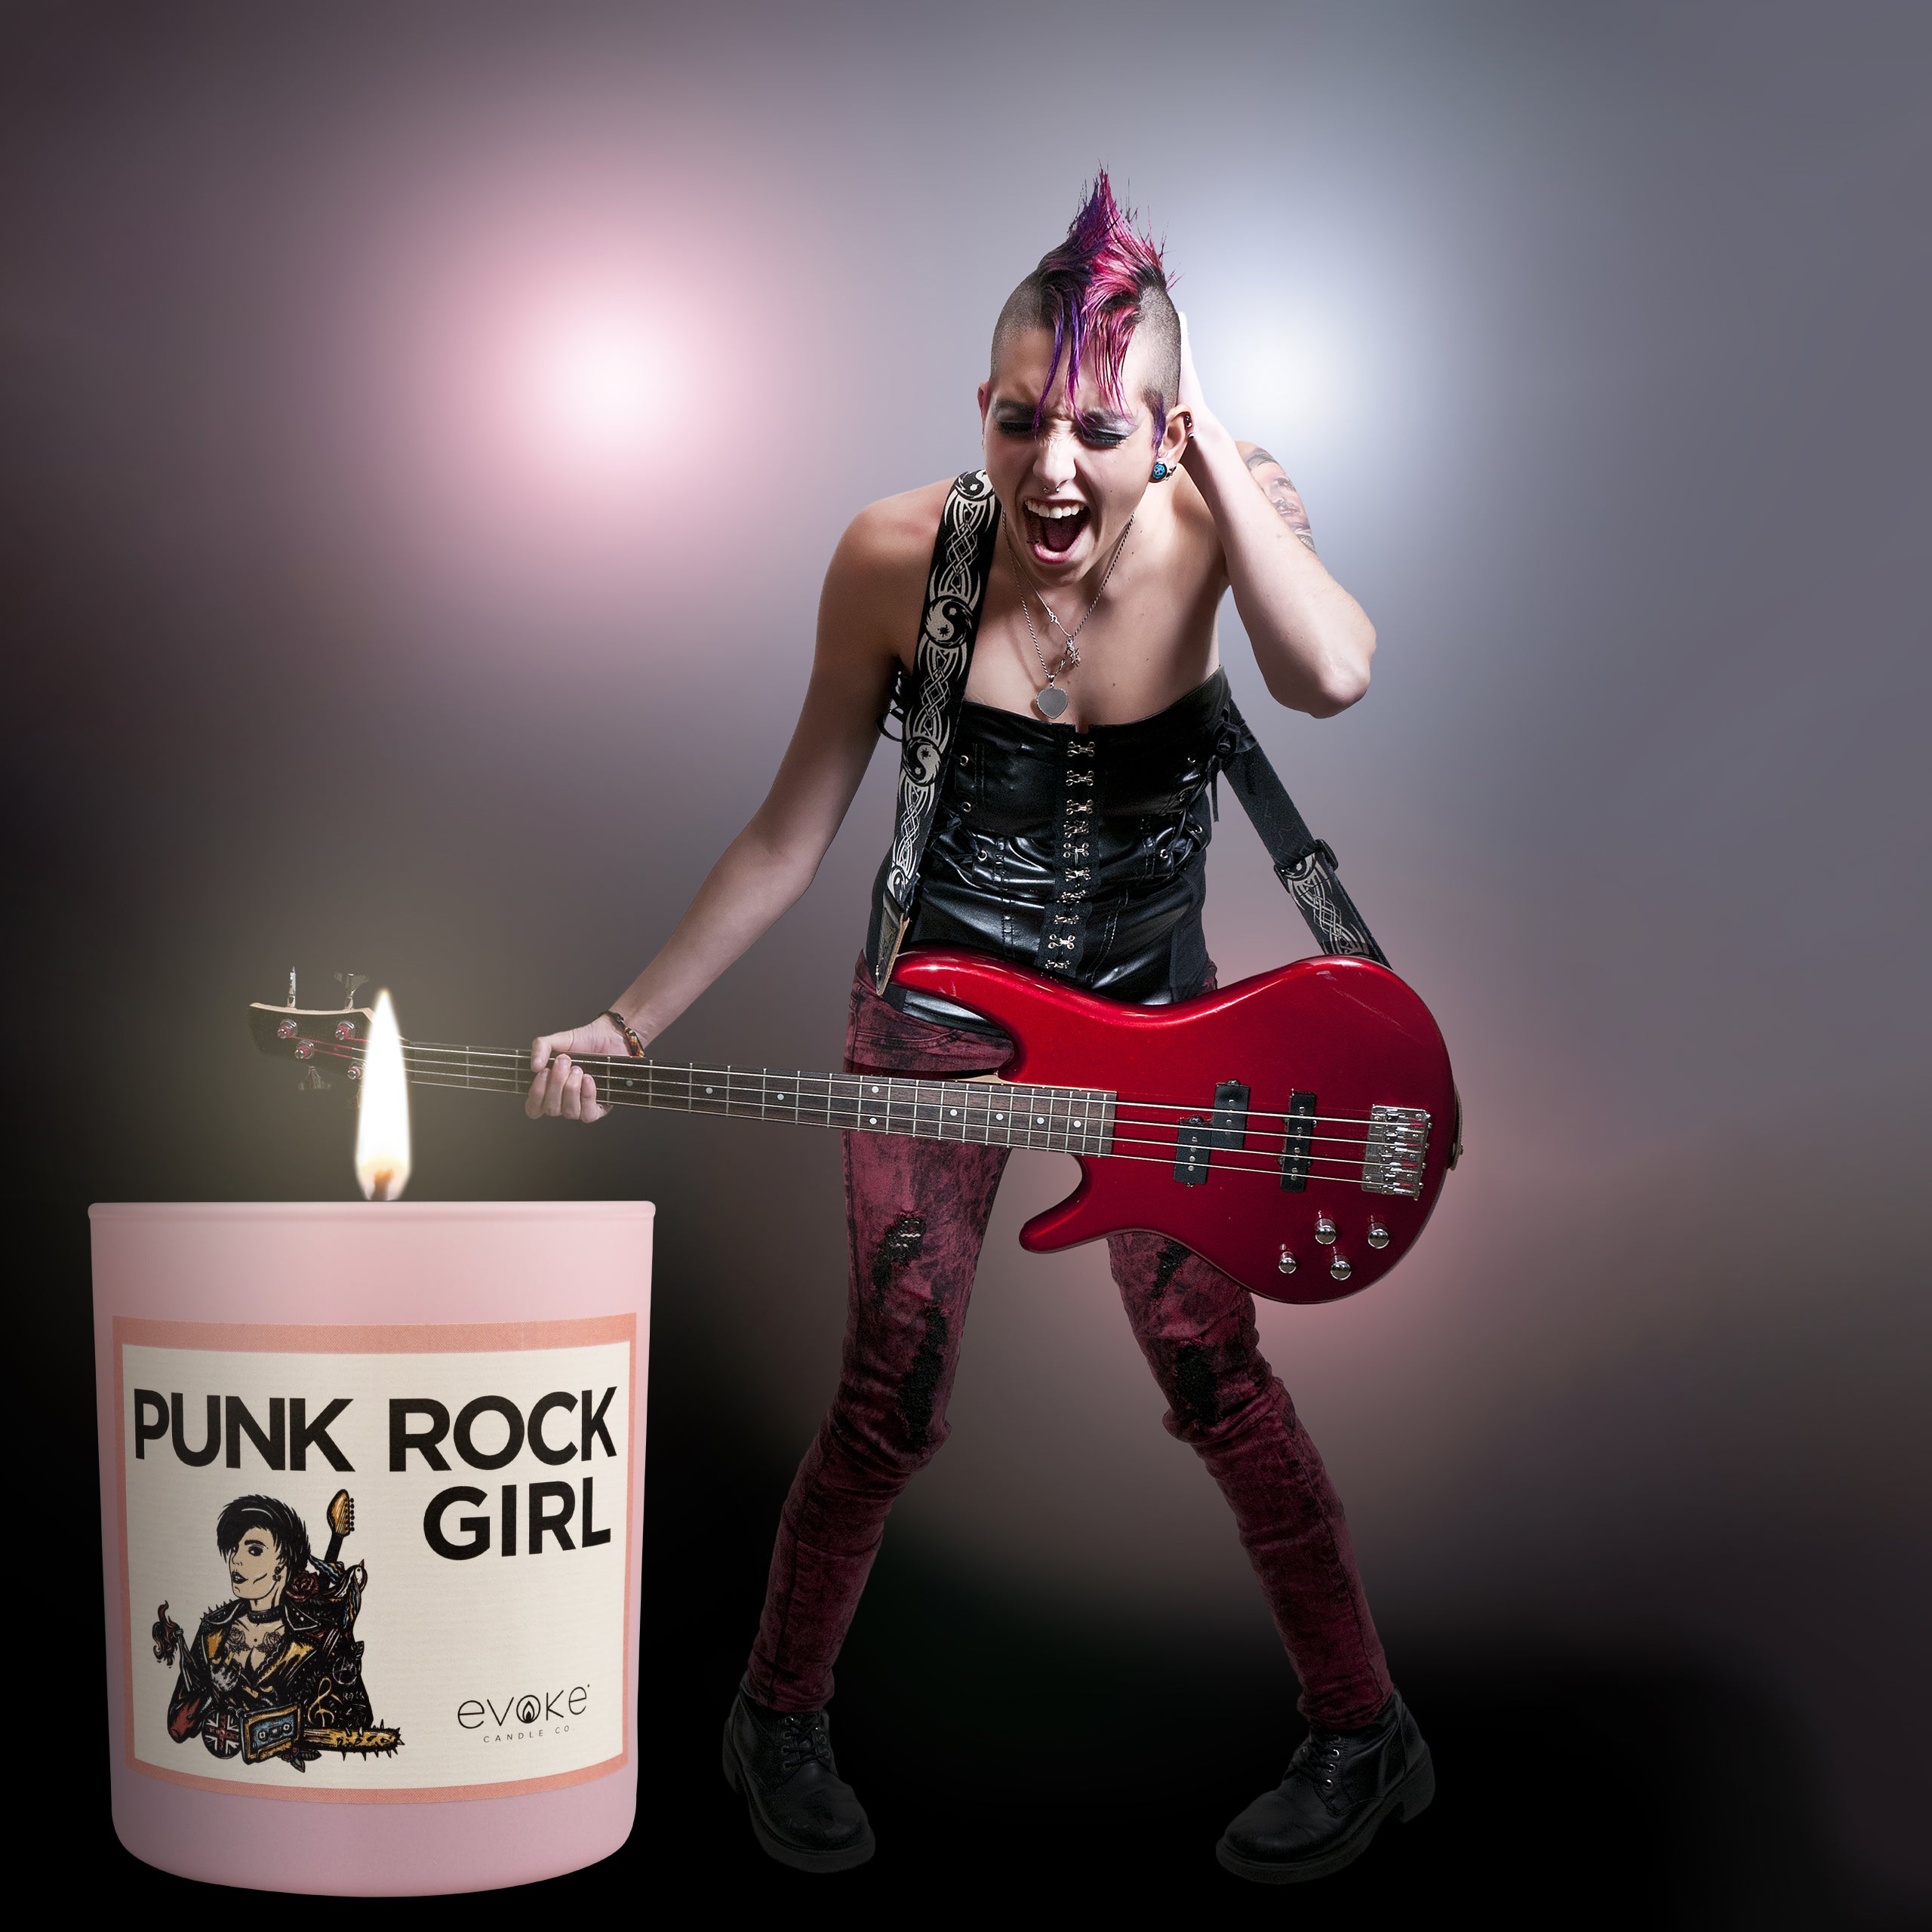 Punk Rock Set Punks Not Dead Words And Design Elements Vector Illustration  Stock Illustration - Download Image Now - iStock